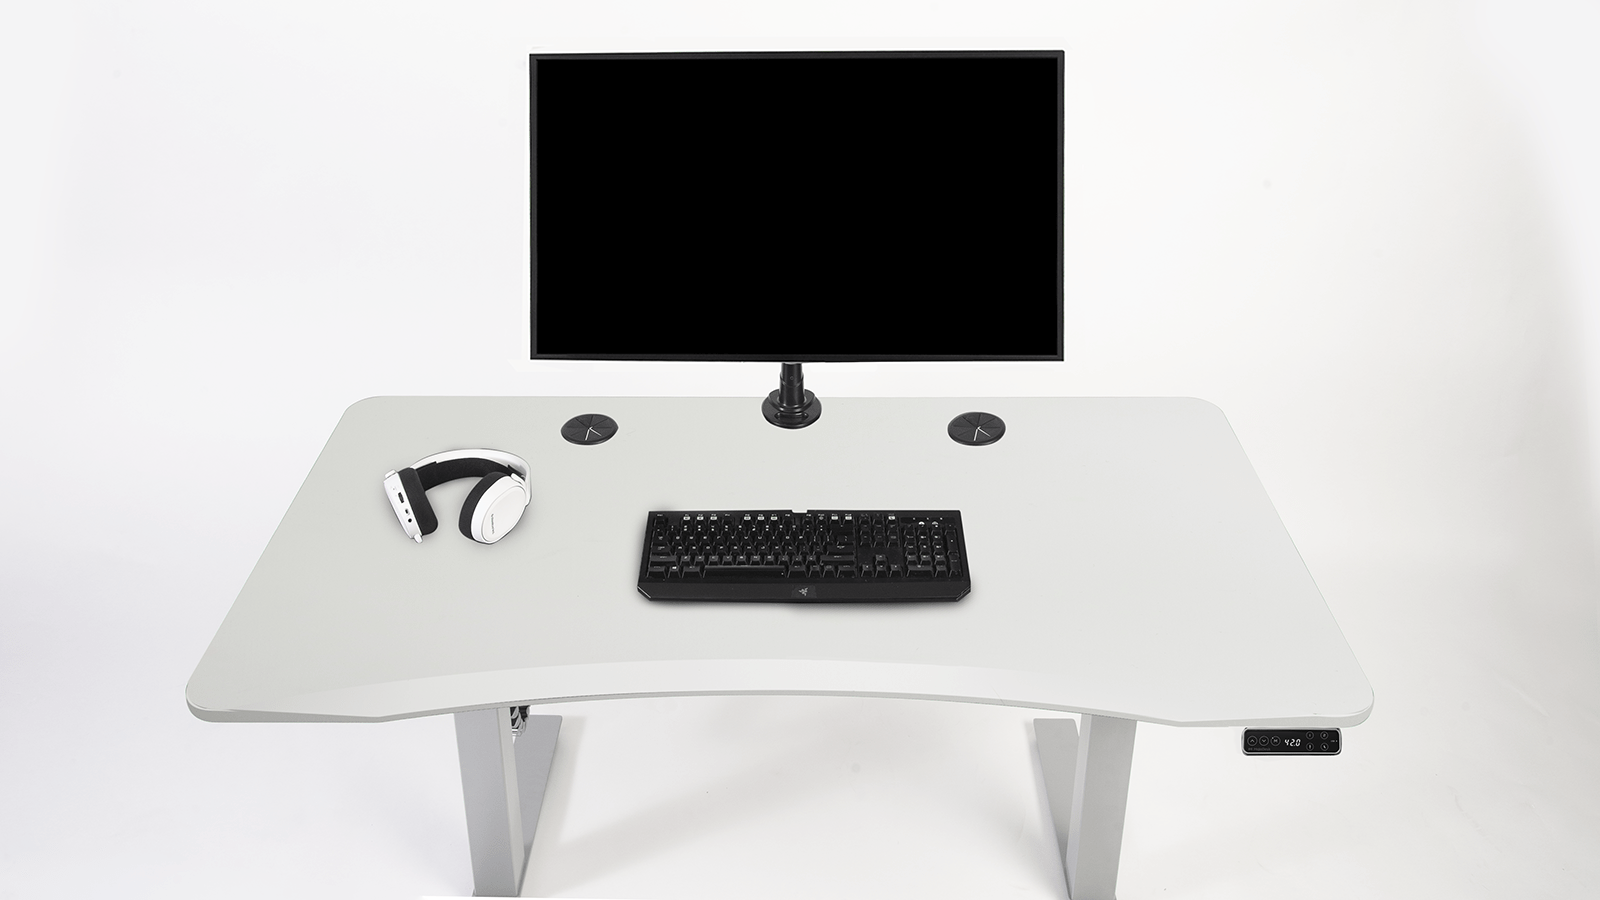 Pre-Configured Standing Desks + Accessories: Personalize & Buy Your Desk in  a Few Clicks! - UPLIFT Desk